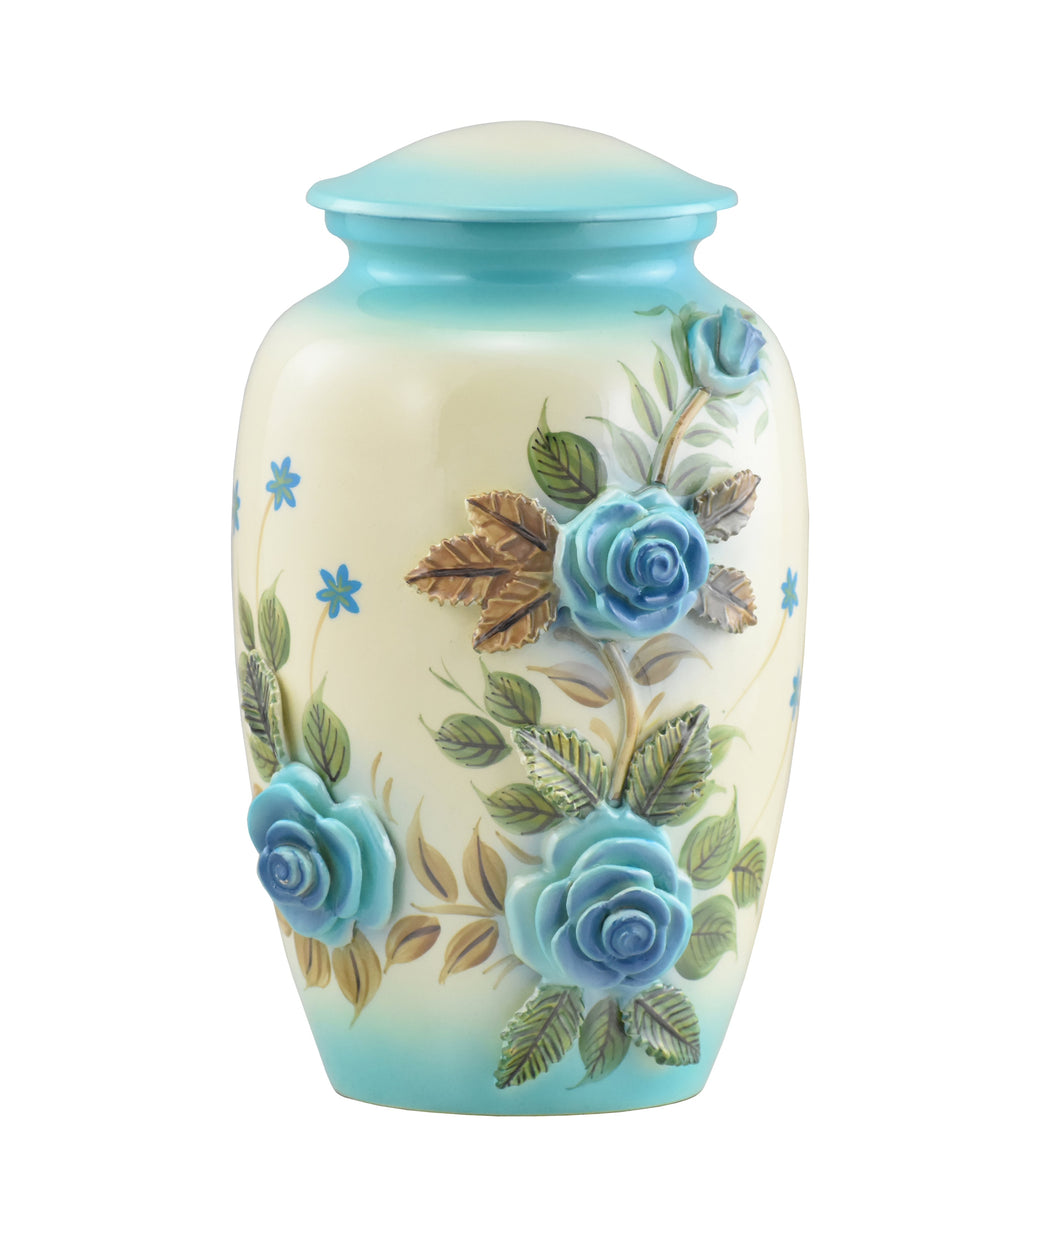 3D Blue Rose Bouquet Cremation Urn - ExquisiteUrns